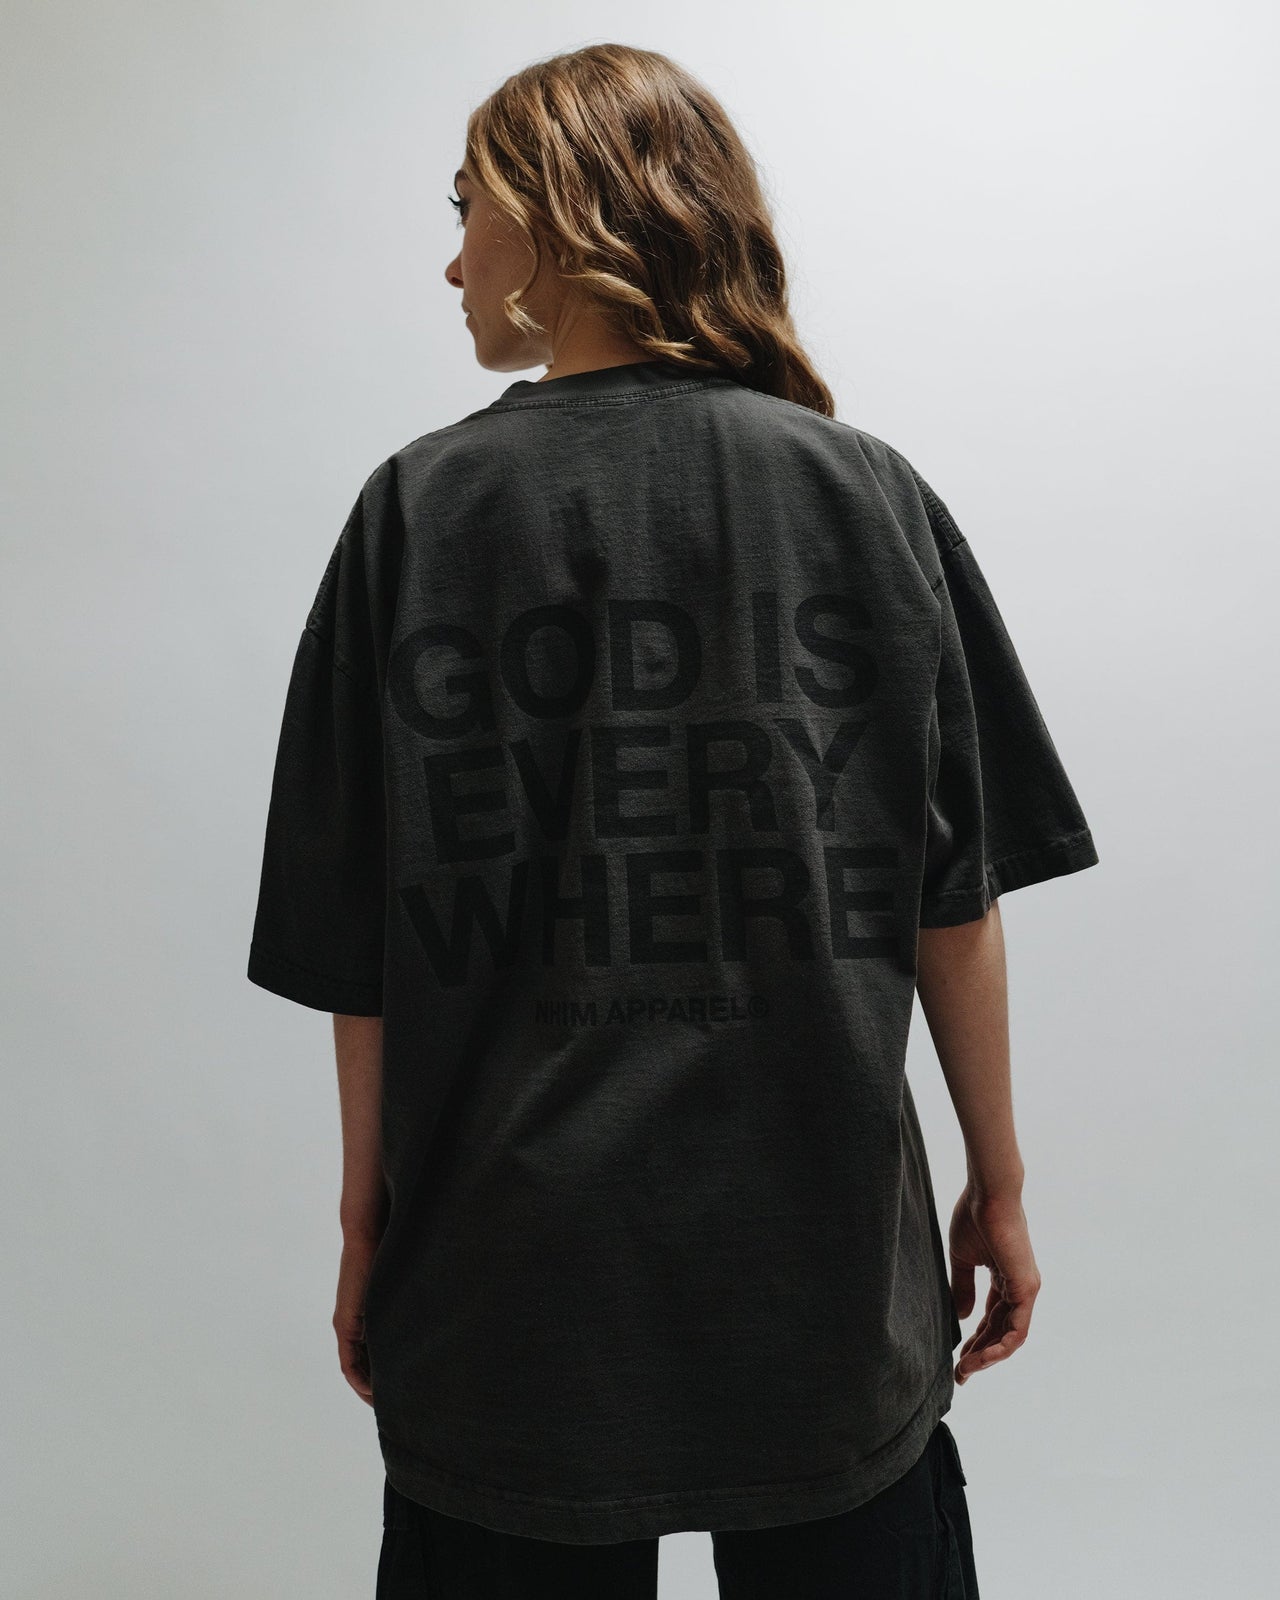 God Is Everywhere vintage black christian t-shirt by NHIM Apparel Christian Clothing Brand